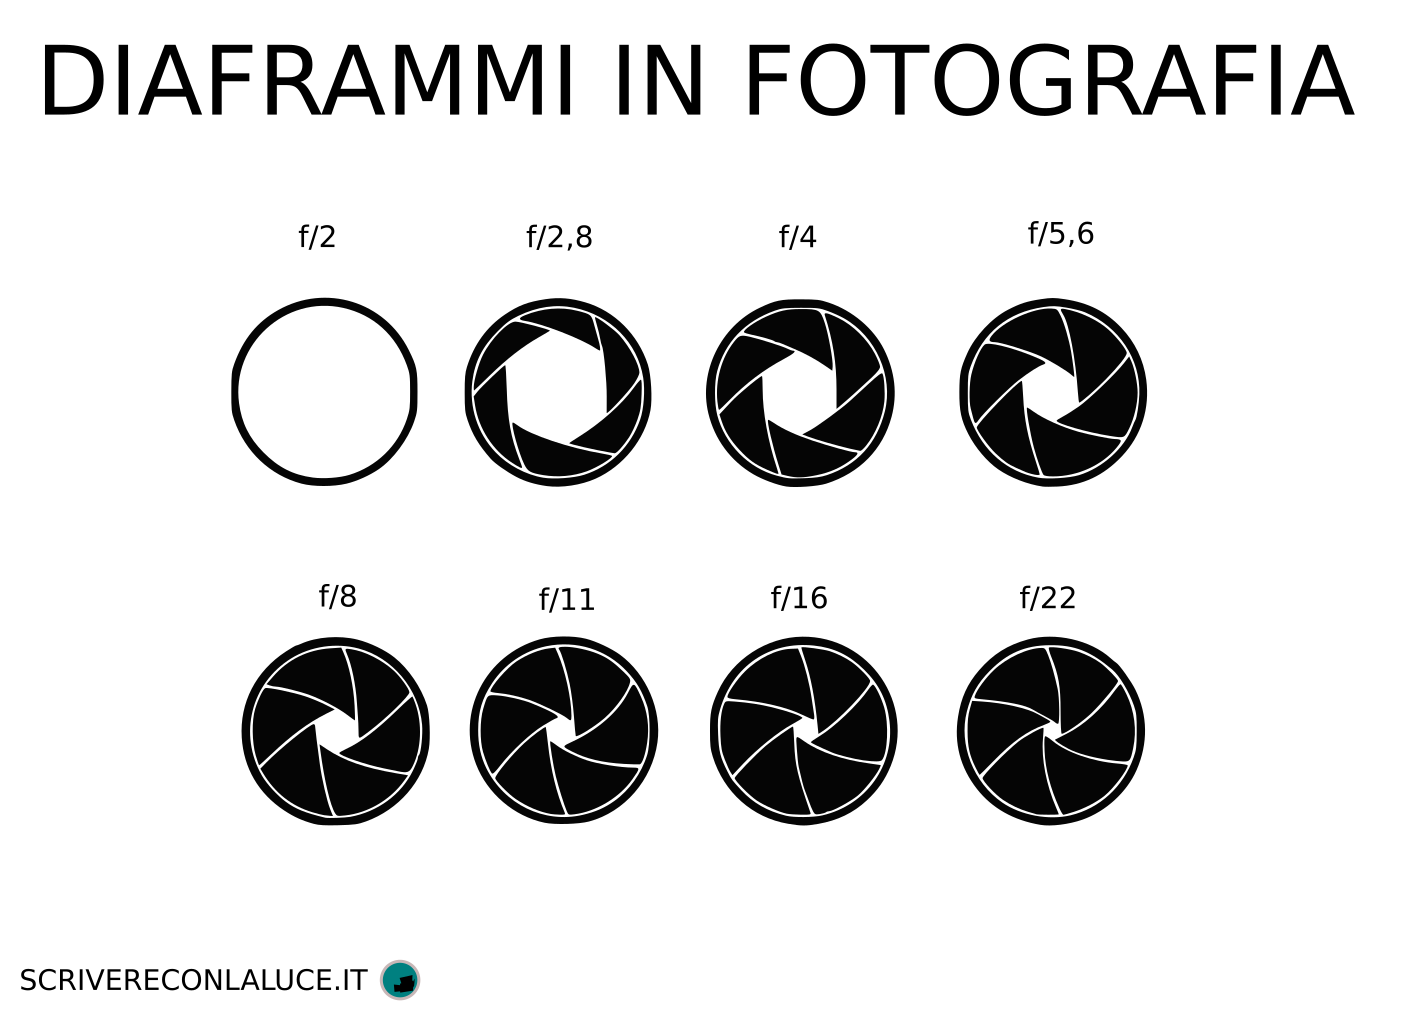 Diaframmi in fotografia